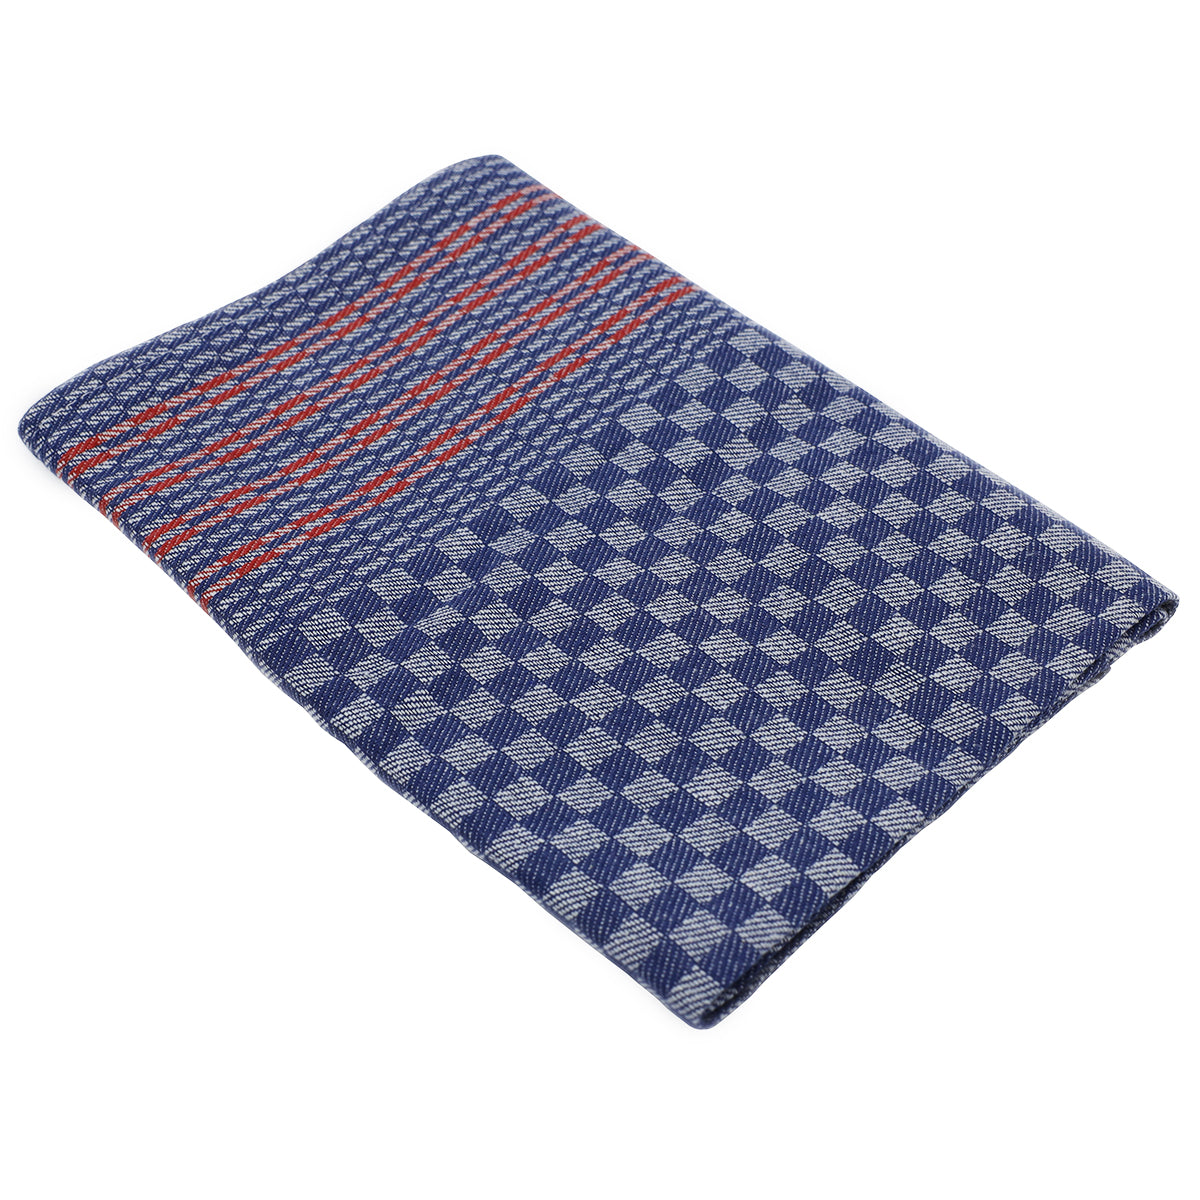 (150 stk) Håndkle i halvlin - 50 x 100 cm - blårutete med røde striper